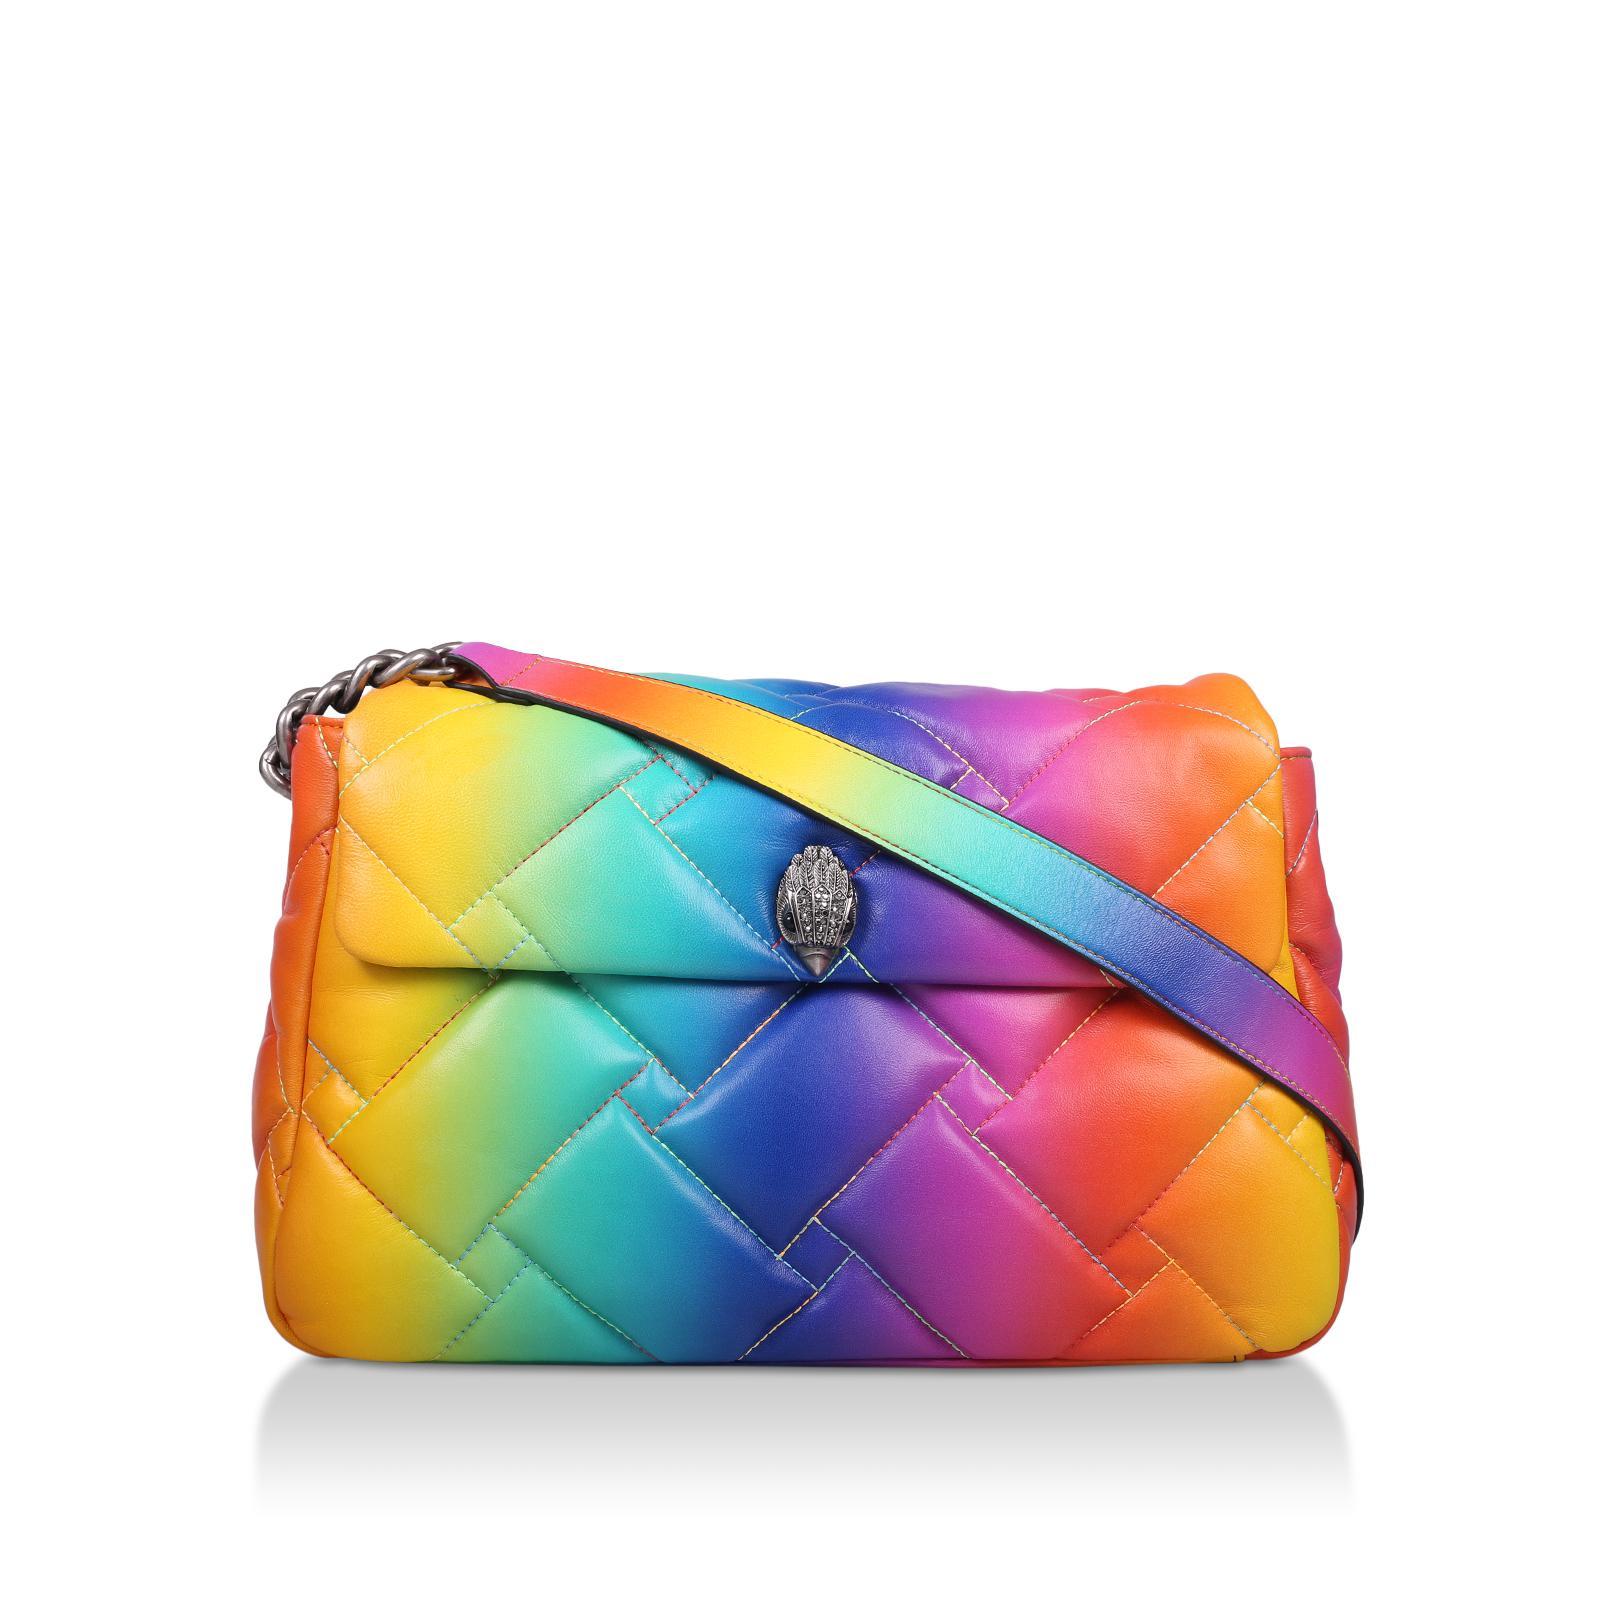 LG KENSINGTON SOFT BAG Large Leather Soft Rainbow Ombre Bag by KURT ...